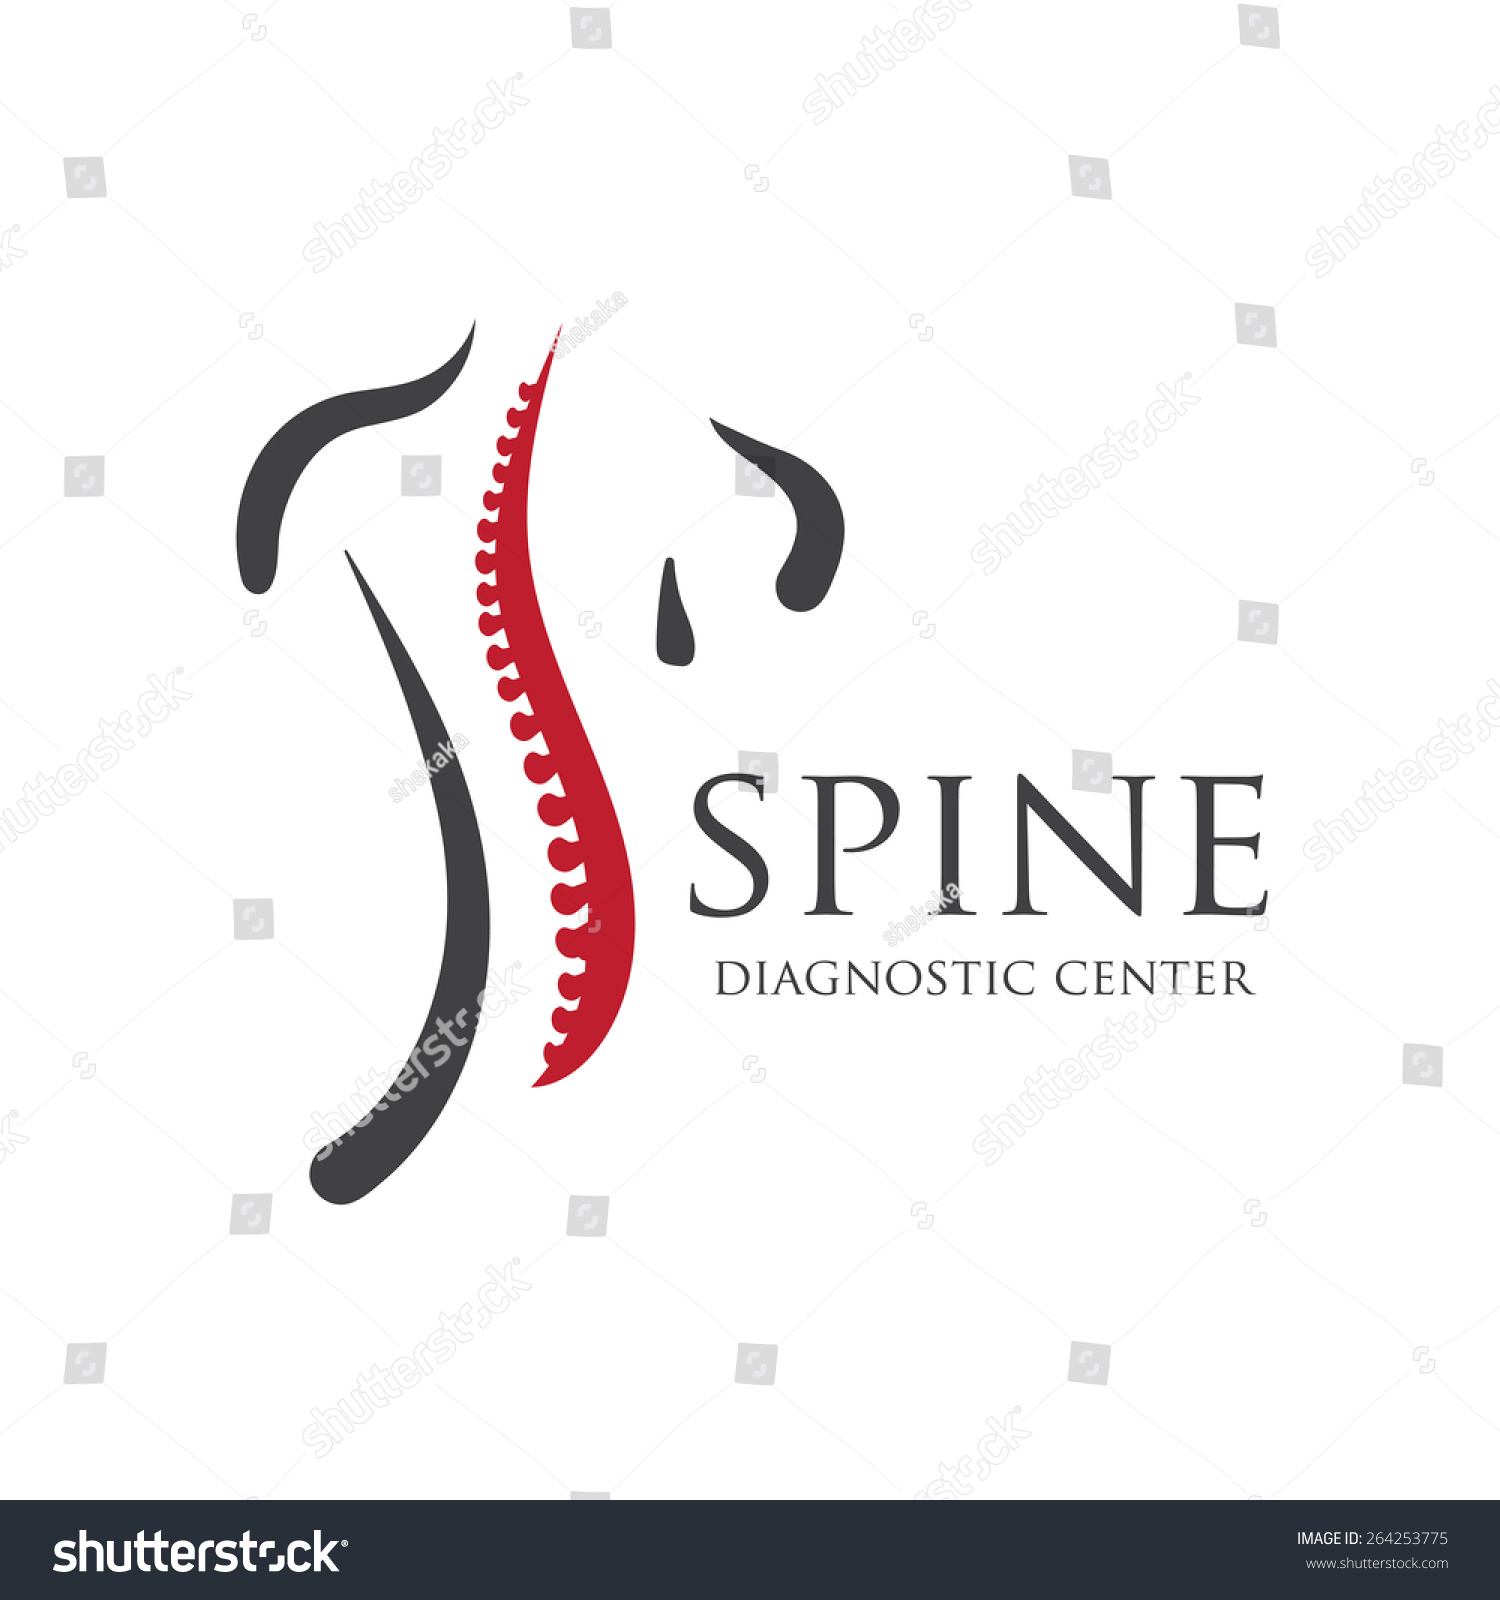 clipart spine logo - photo #14